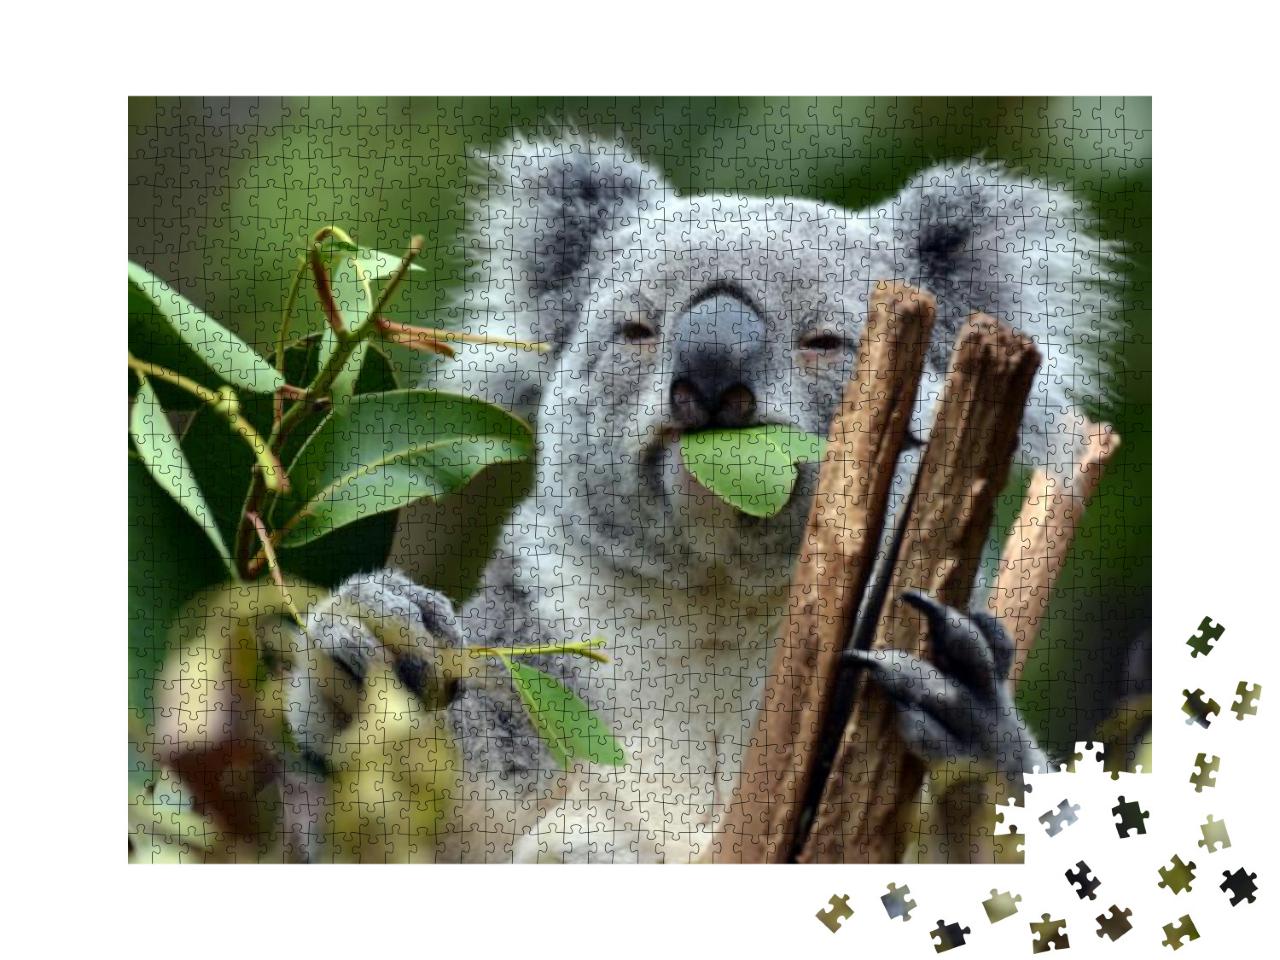 Koala At Lone Pine Koala Sanctuary Brisbane... Jigsaw Puzzle with 1000 pieces